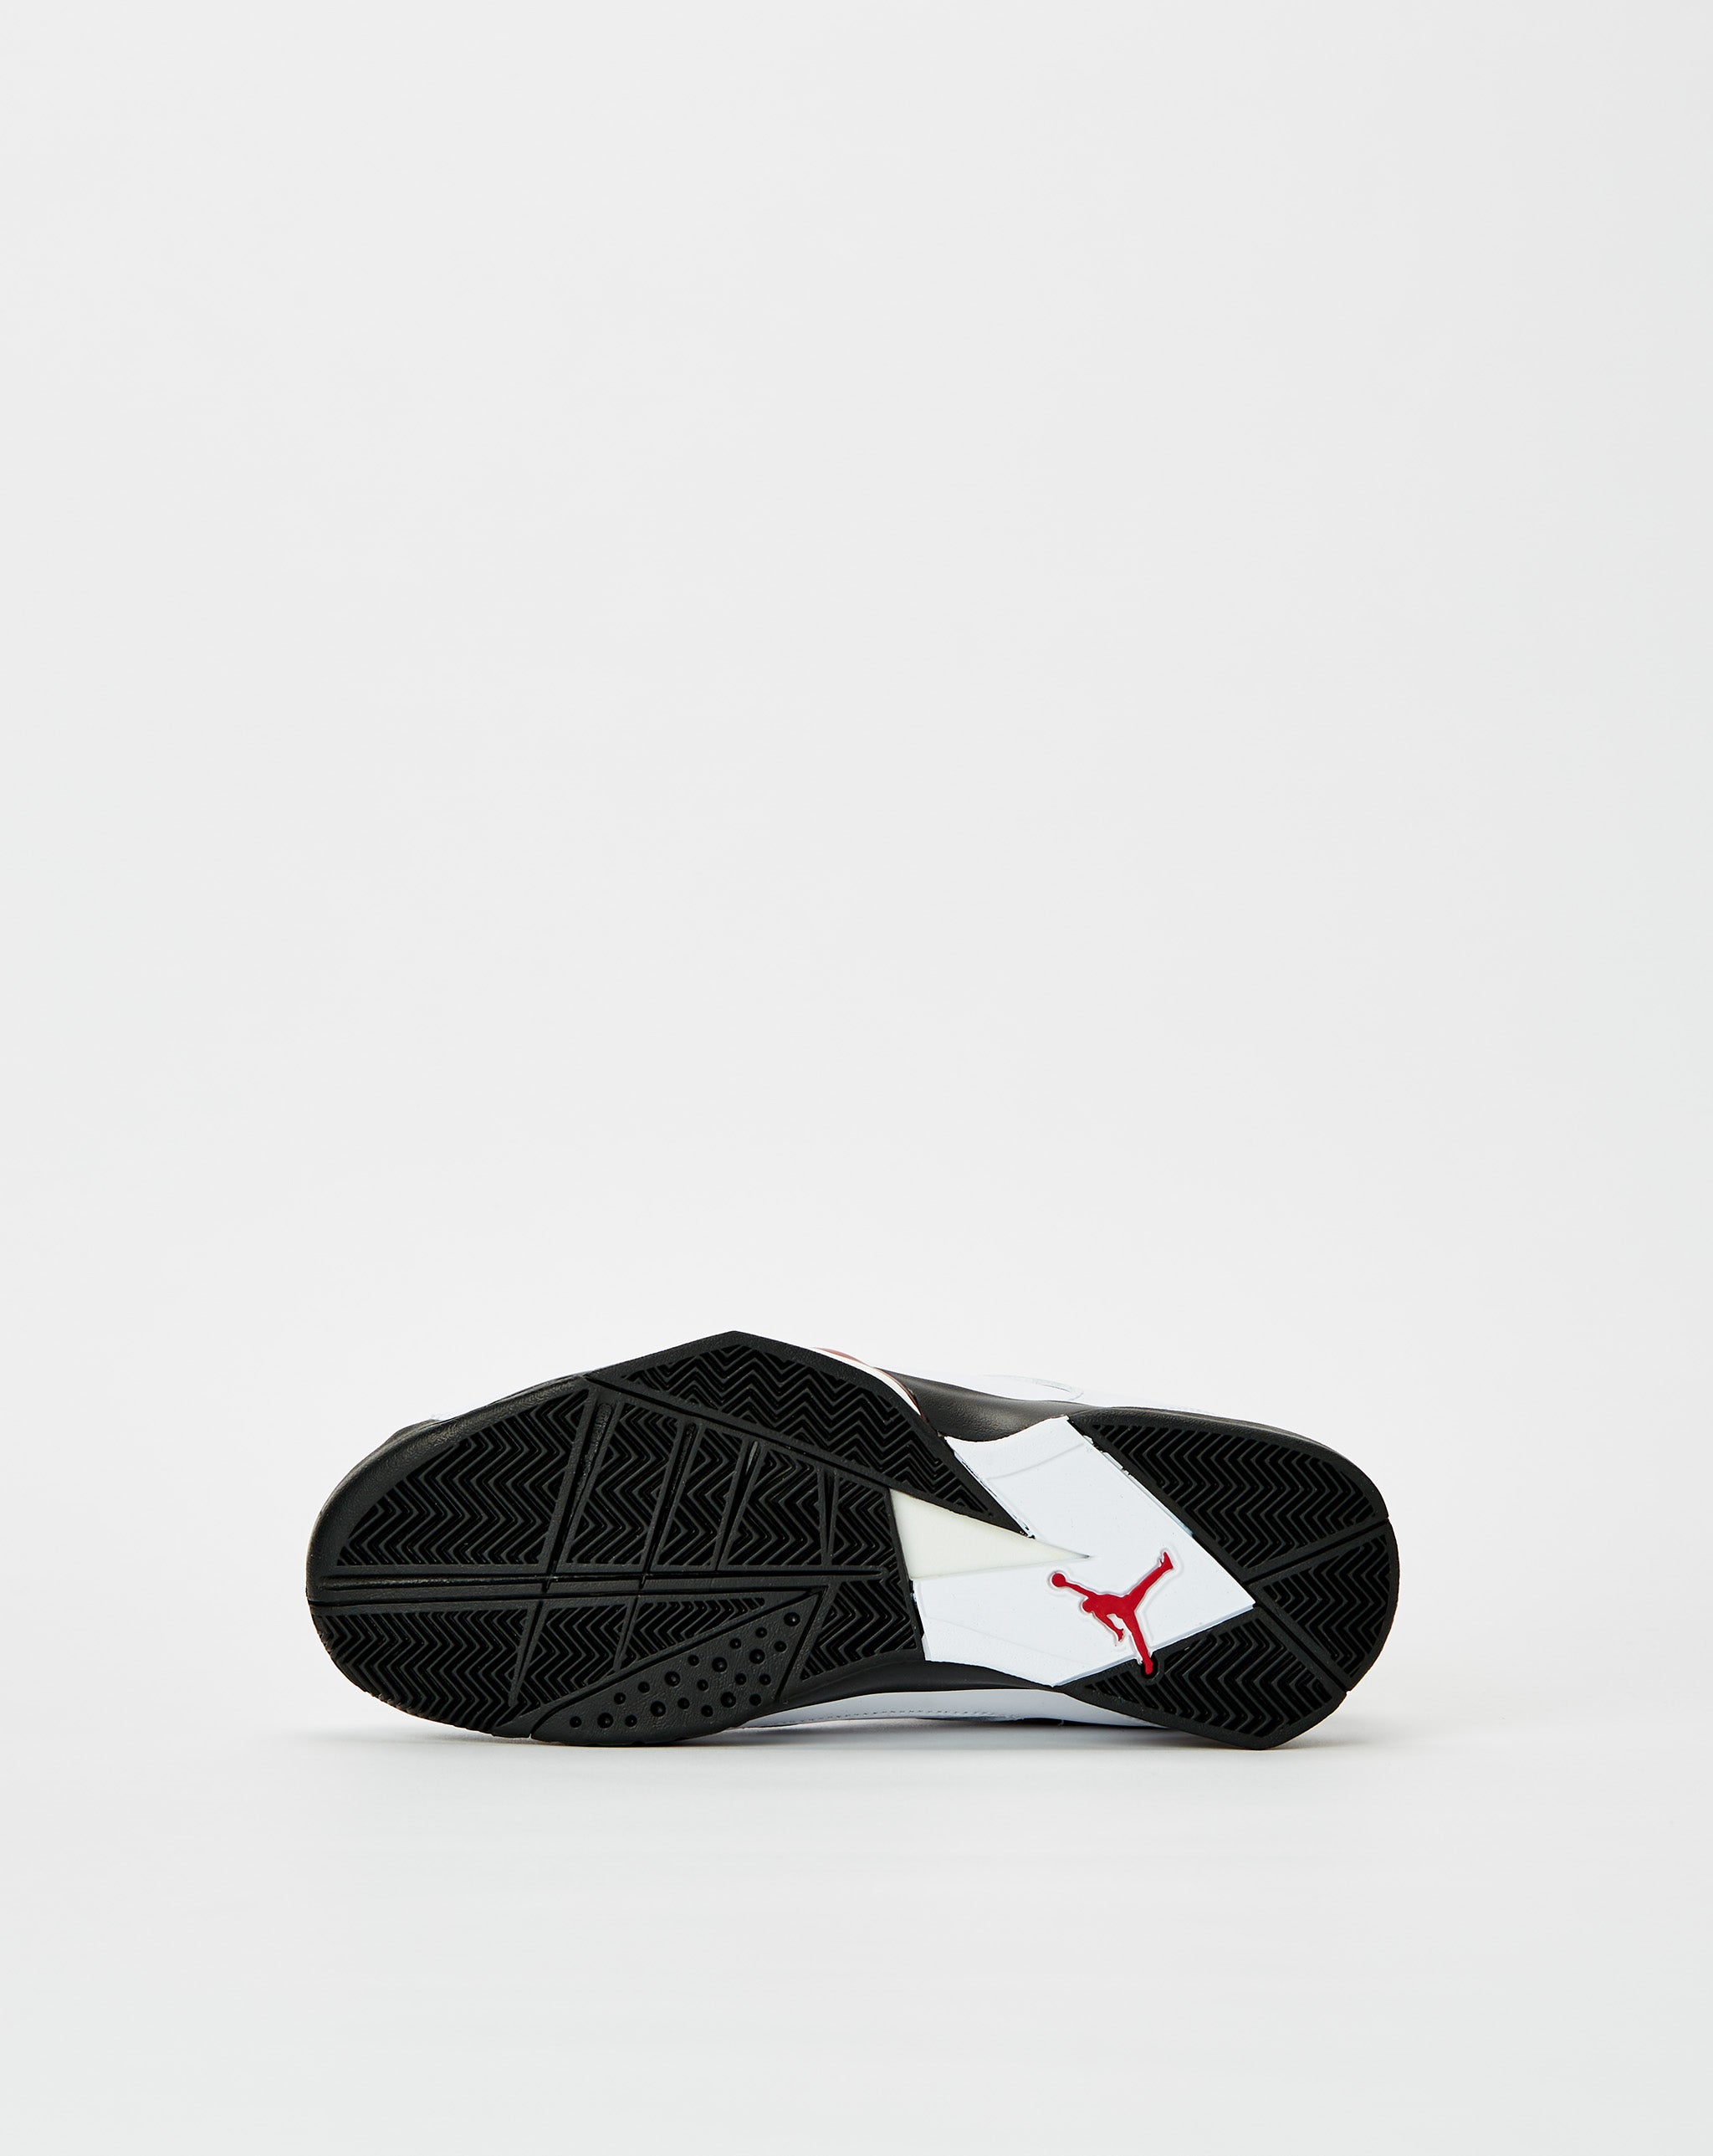 Air Jordan zapatillas de running hombre ritmo medio talla 26 baratas menos de 60  - Cheap Erlebniswelt-fliegenfischen Jordan outlet